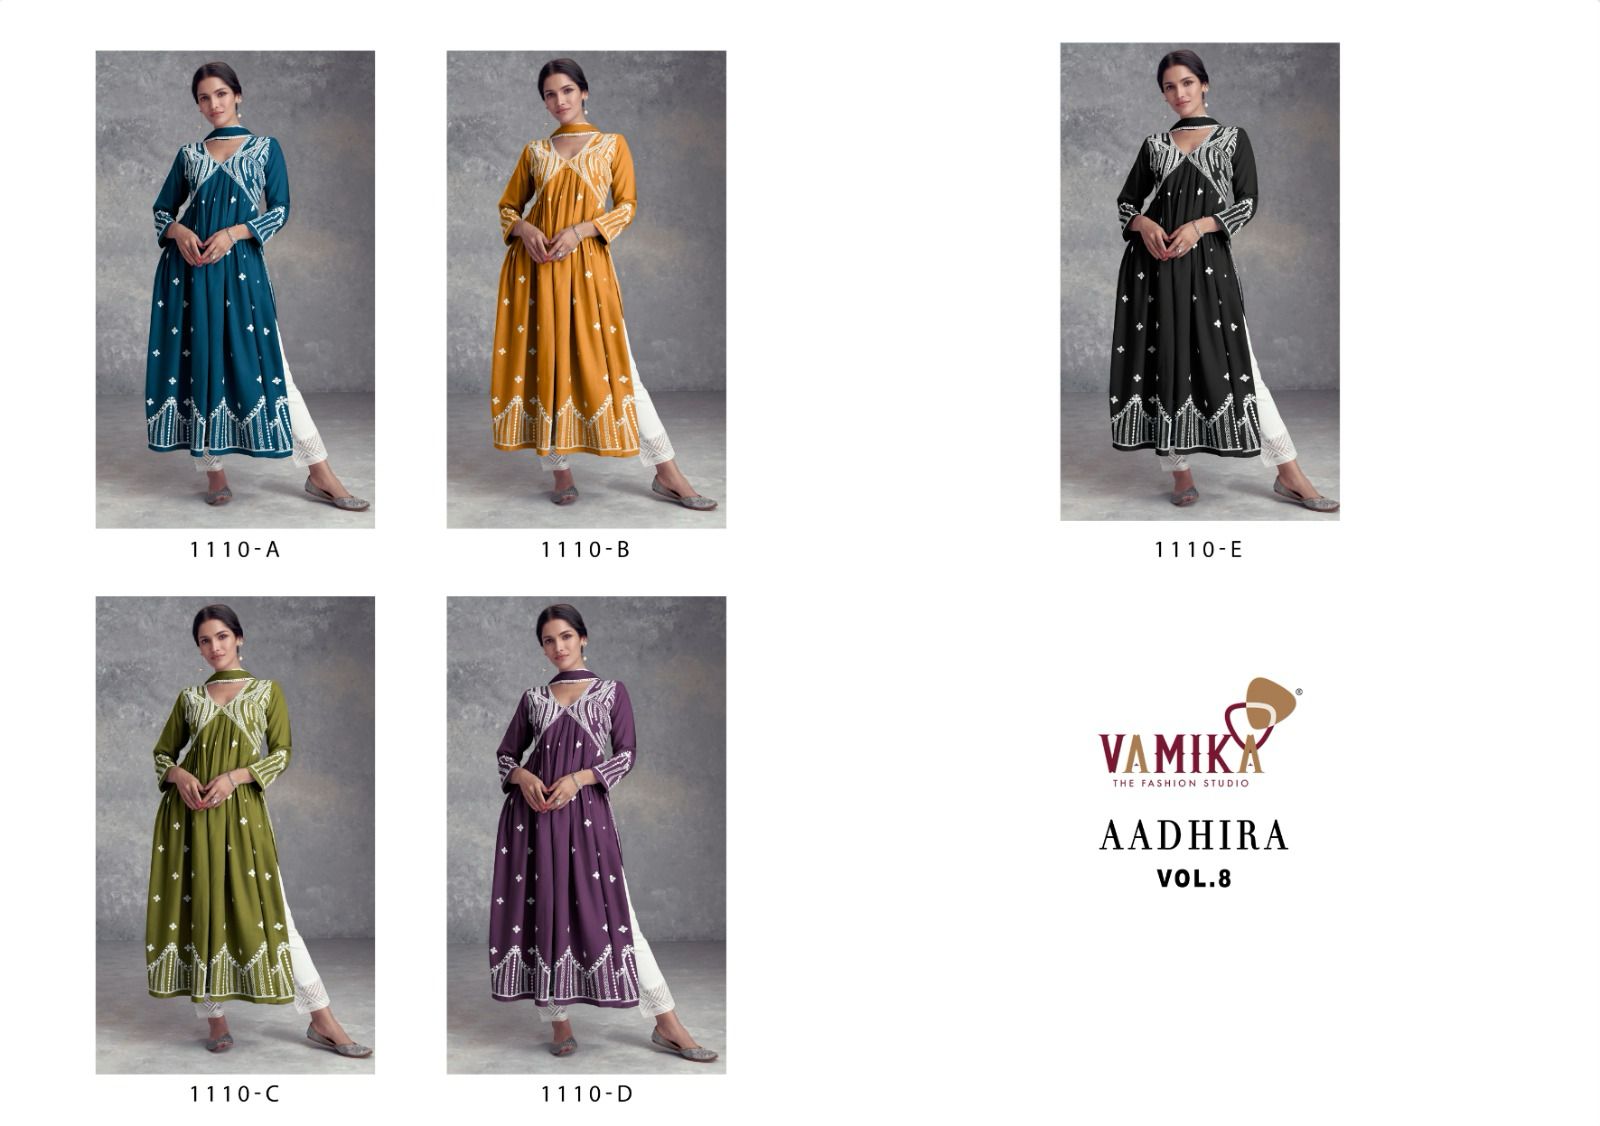 Vamika Aadhira Vol 8 collection 3